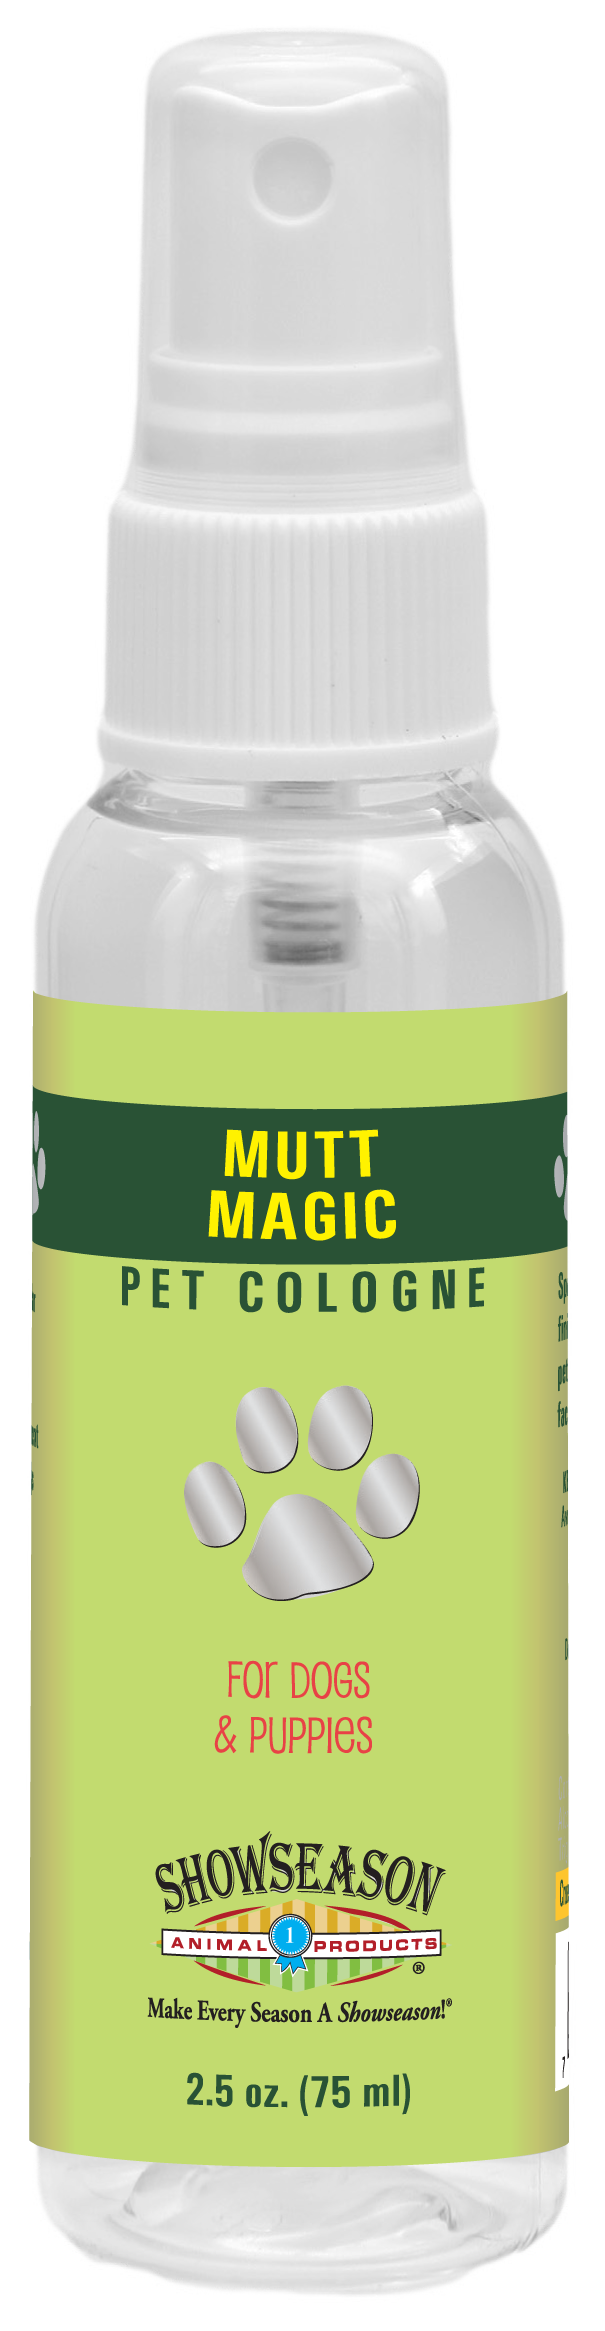 Mutt Magic Pet Cologne